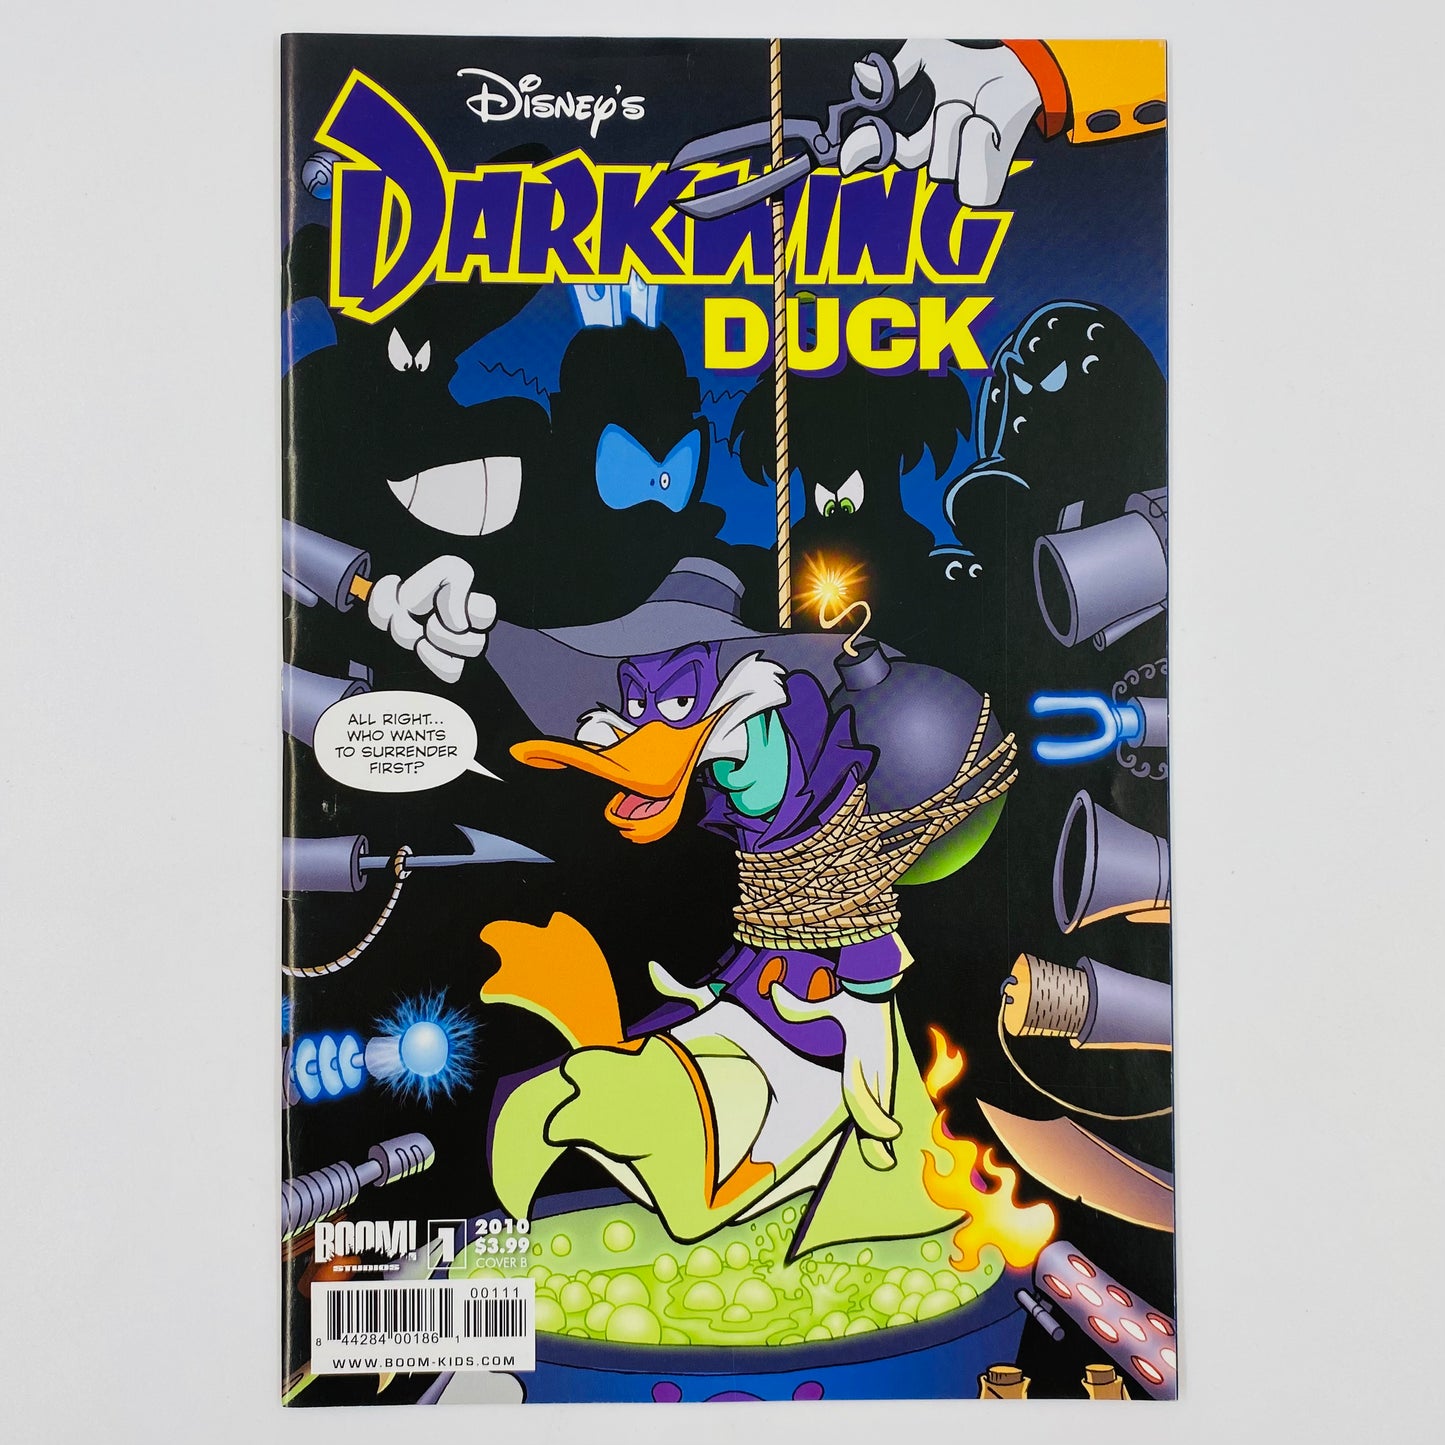 Darkwing Duck #1B, #2A, #3B, #4A (2010) BOOM!